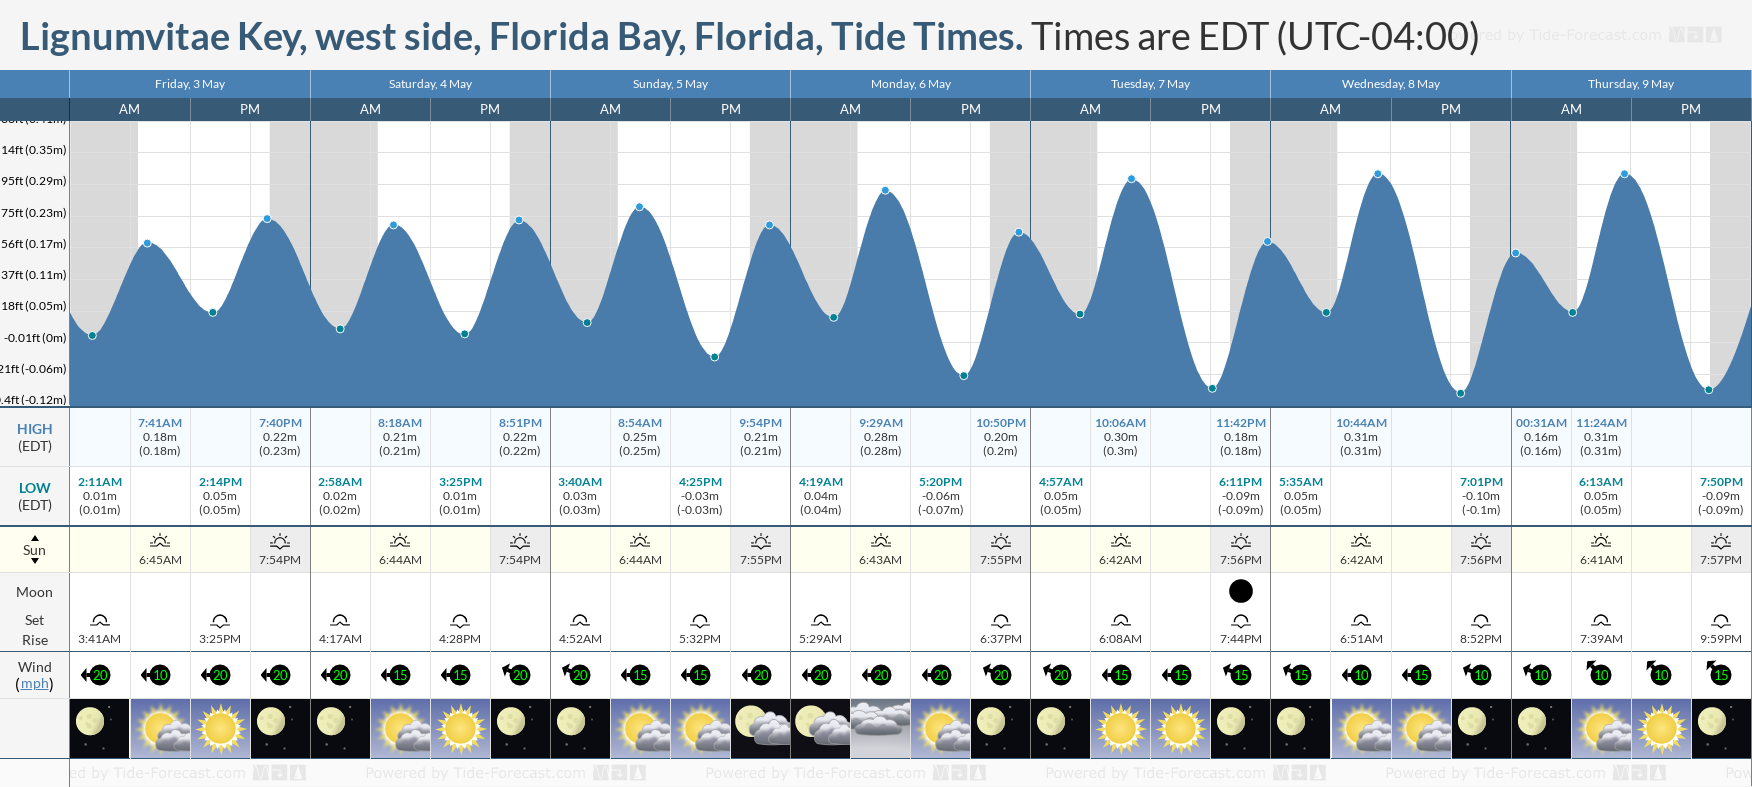 Lignumvitae Key, west side, Florida Bay, Florida Tide Chart including high and low tide tide times for the next 7 days